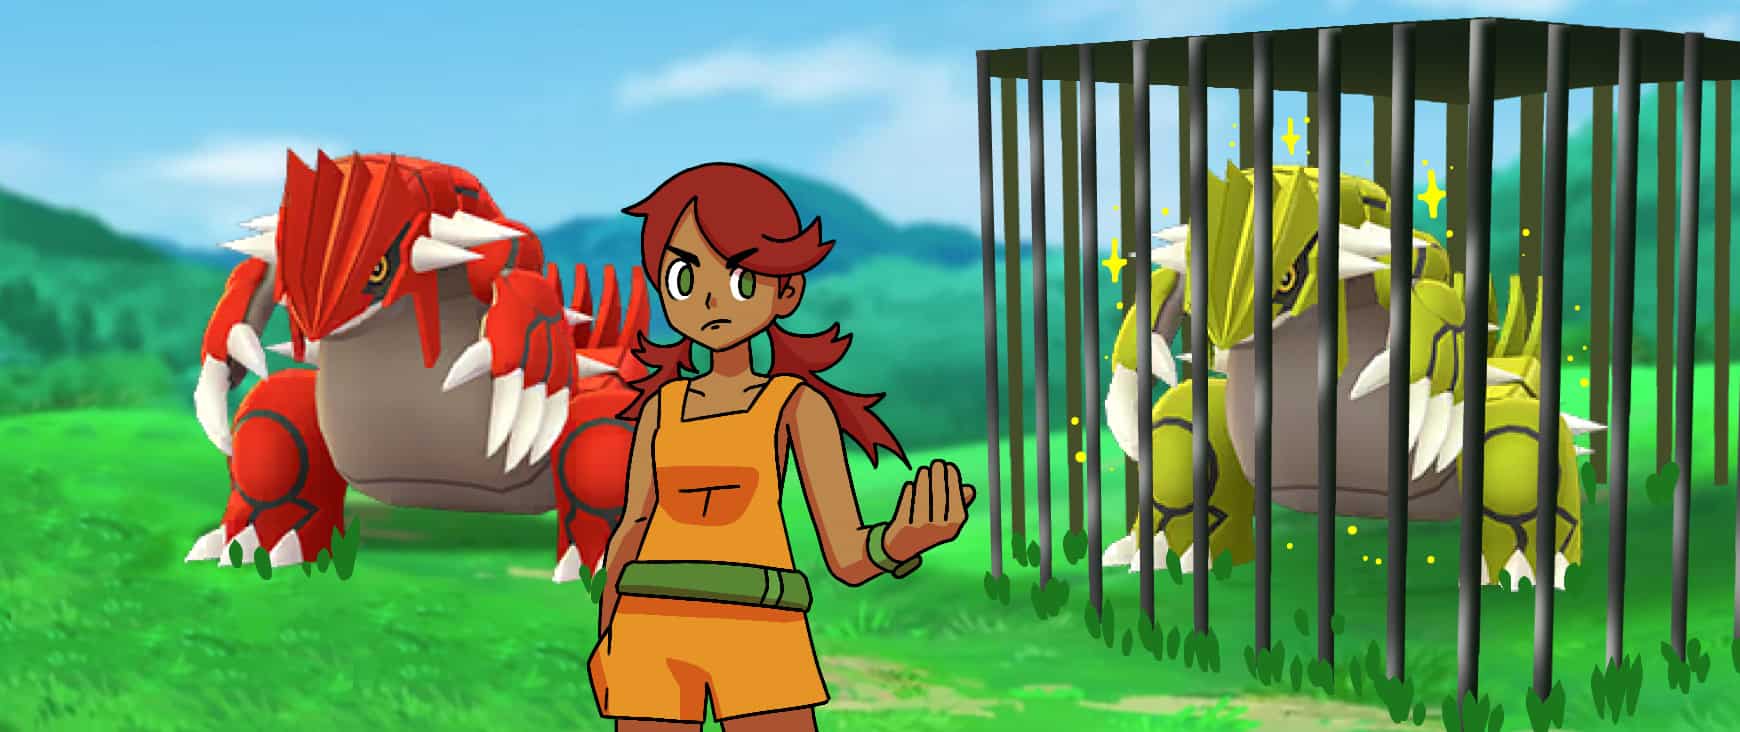 Shiny locked Mythic and Legendary Pokémon